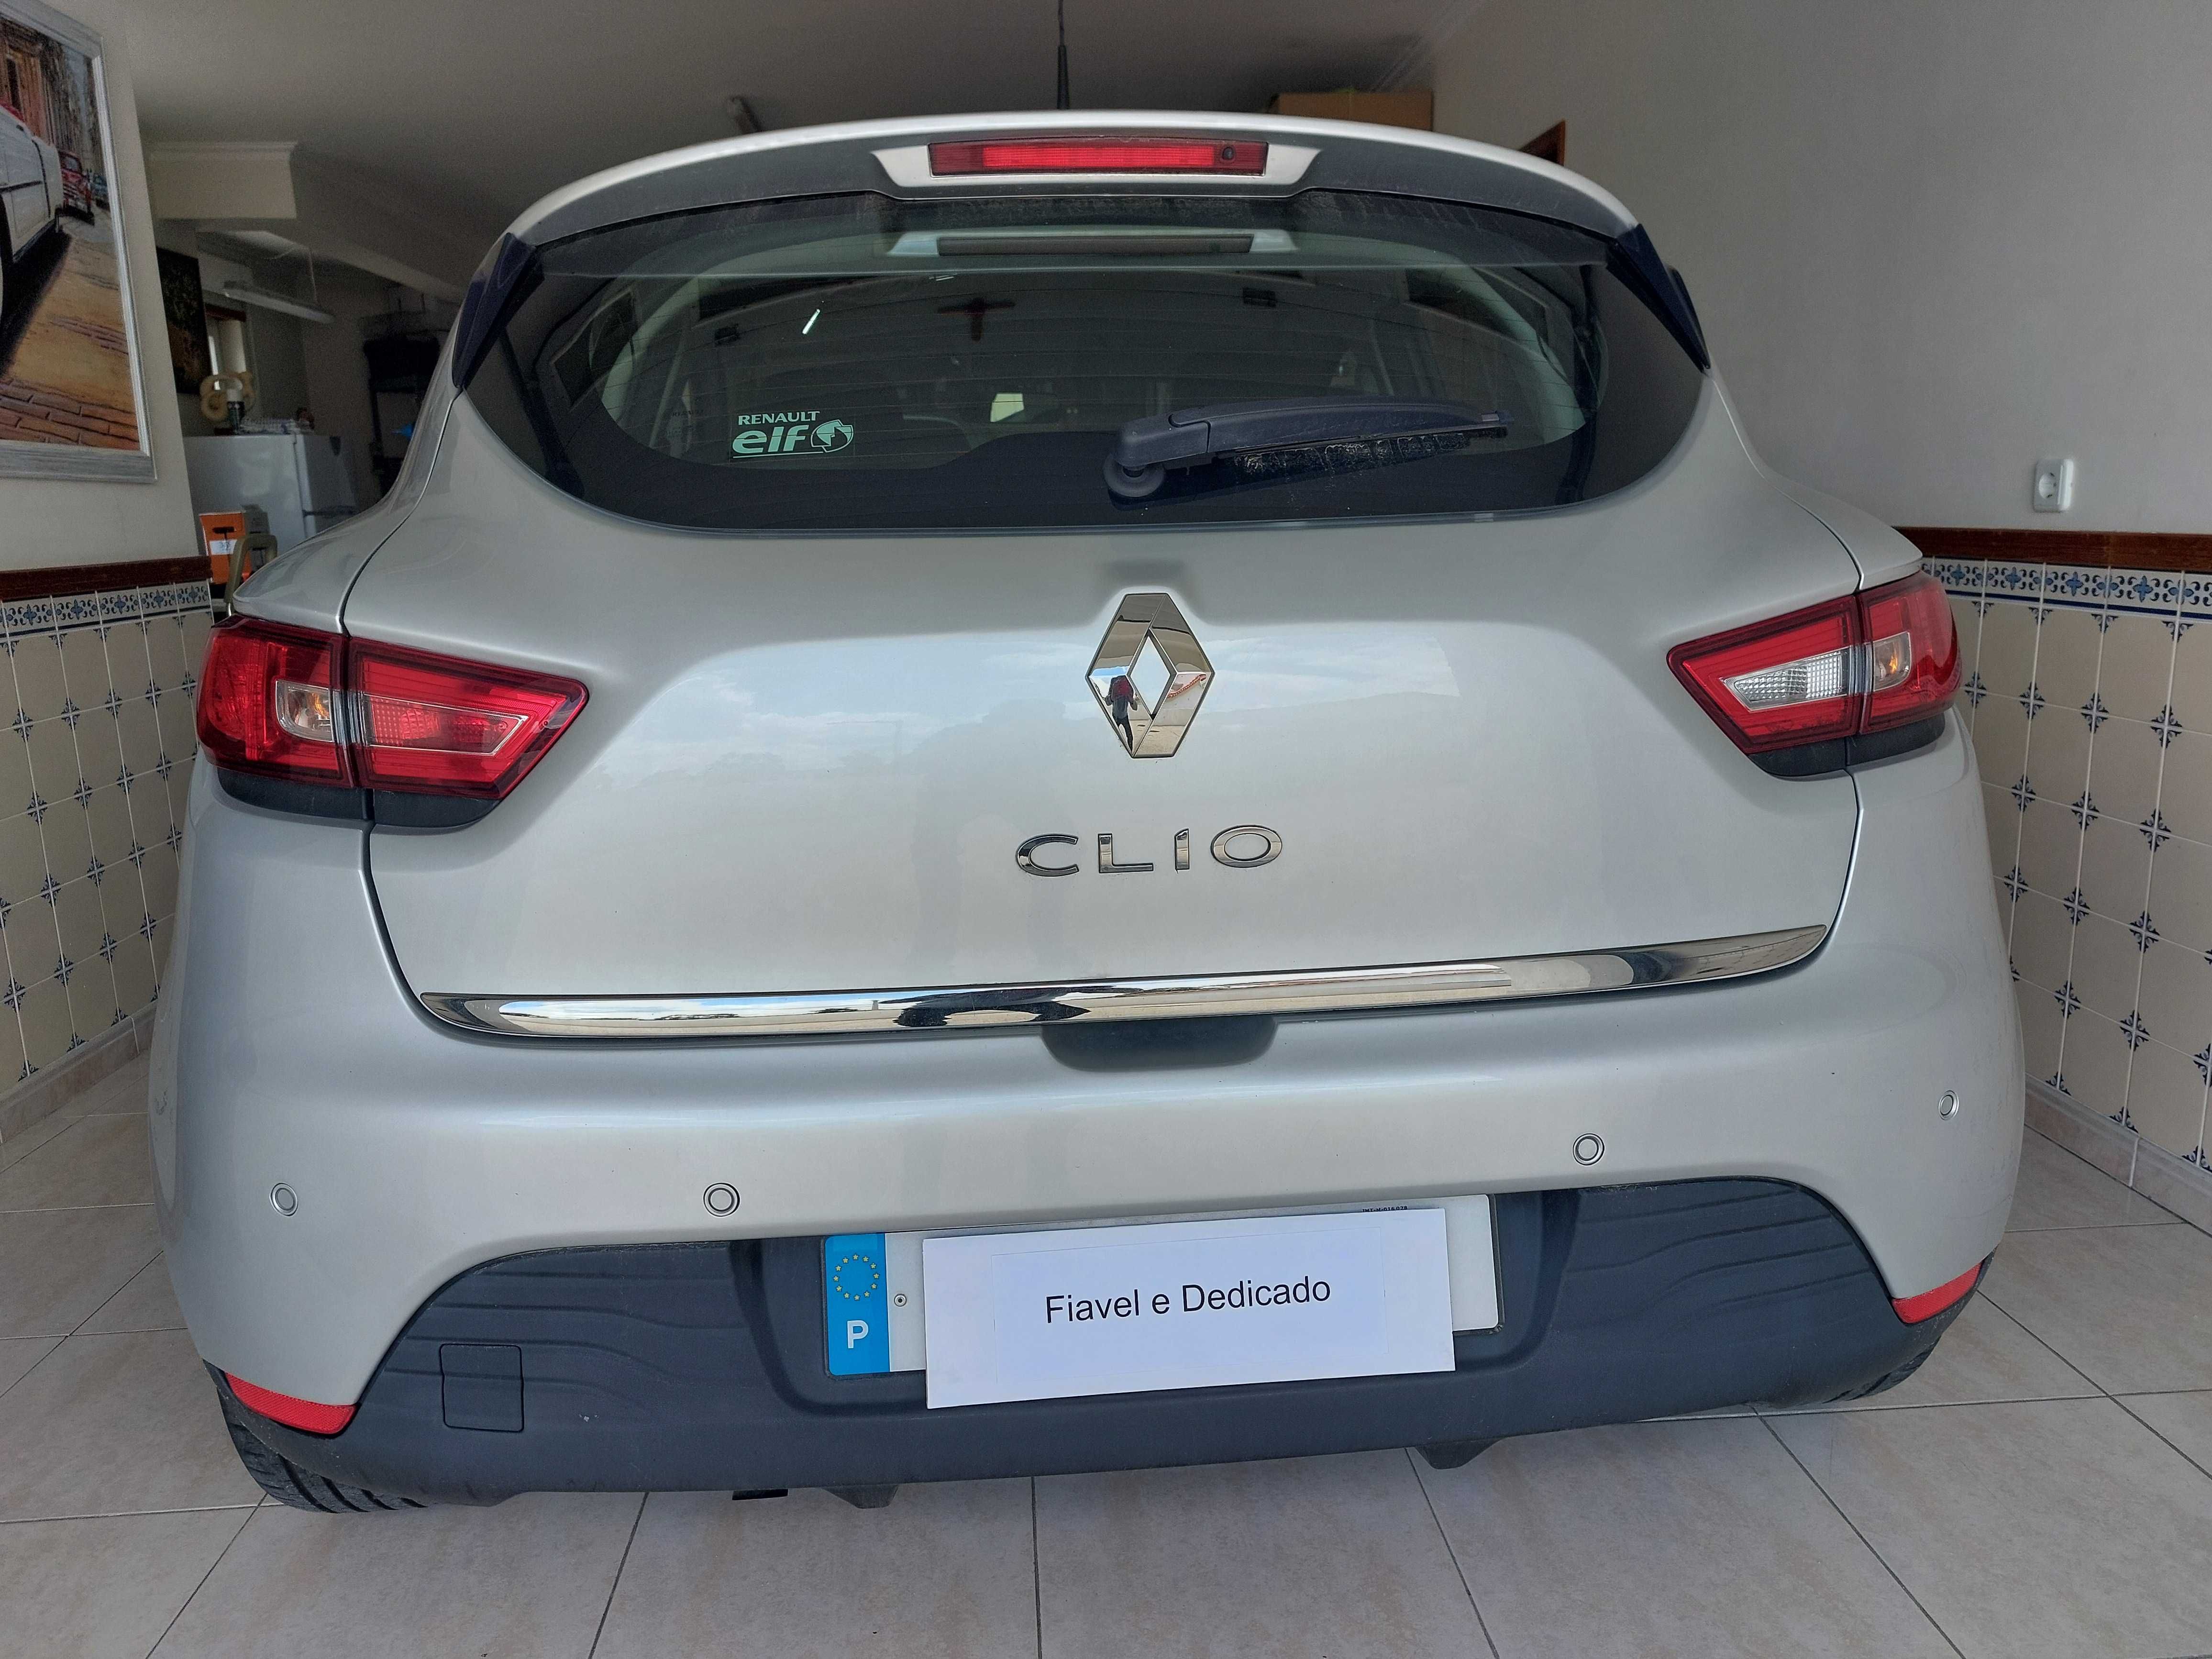 CLIO Renault 1,5 Dci 2019 so 41600 kms - RARO - Impecavel